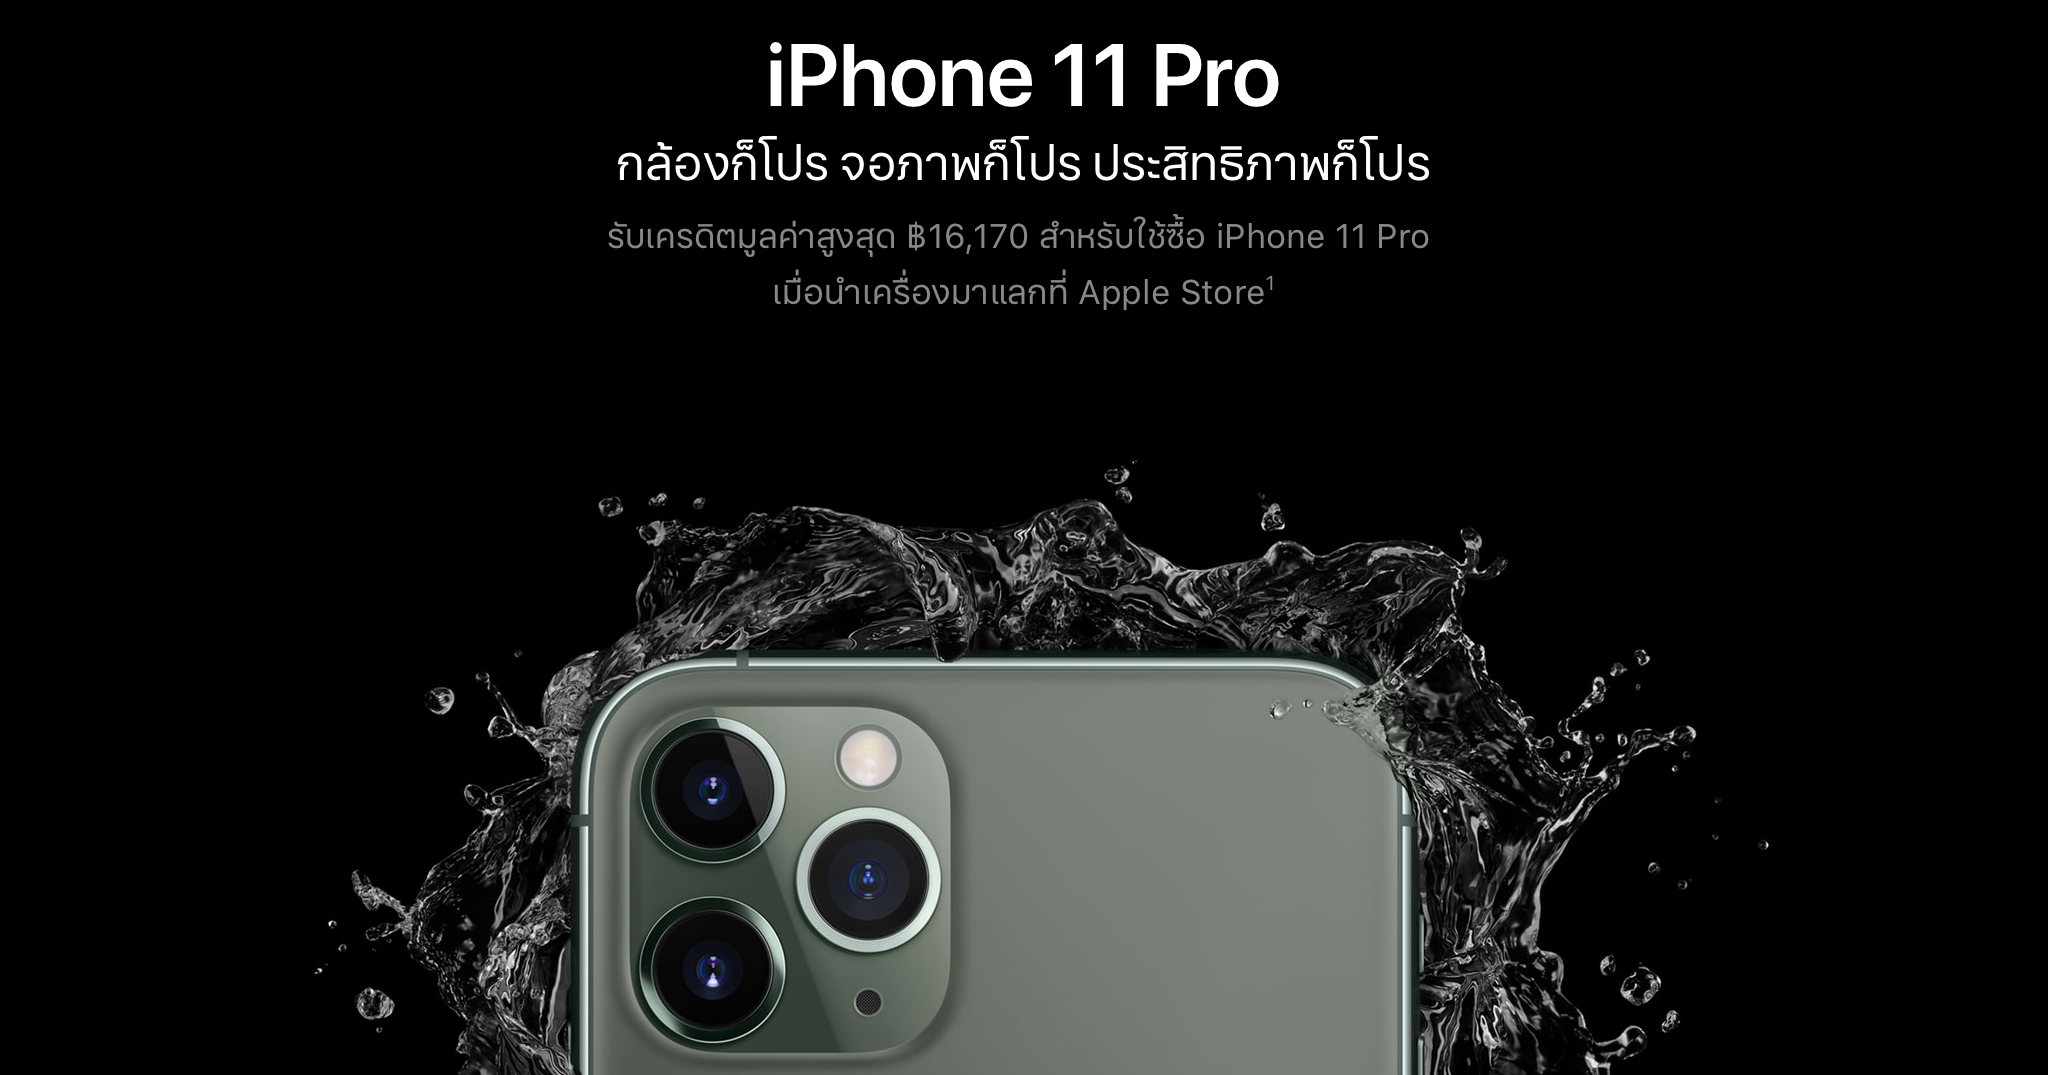 alt="iPhone 11 Pro TH"